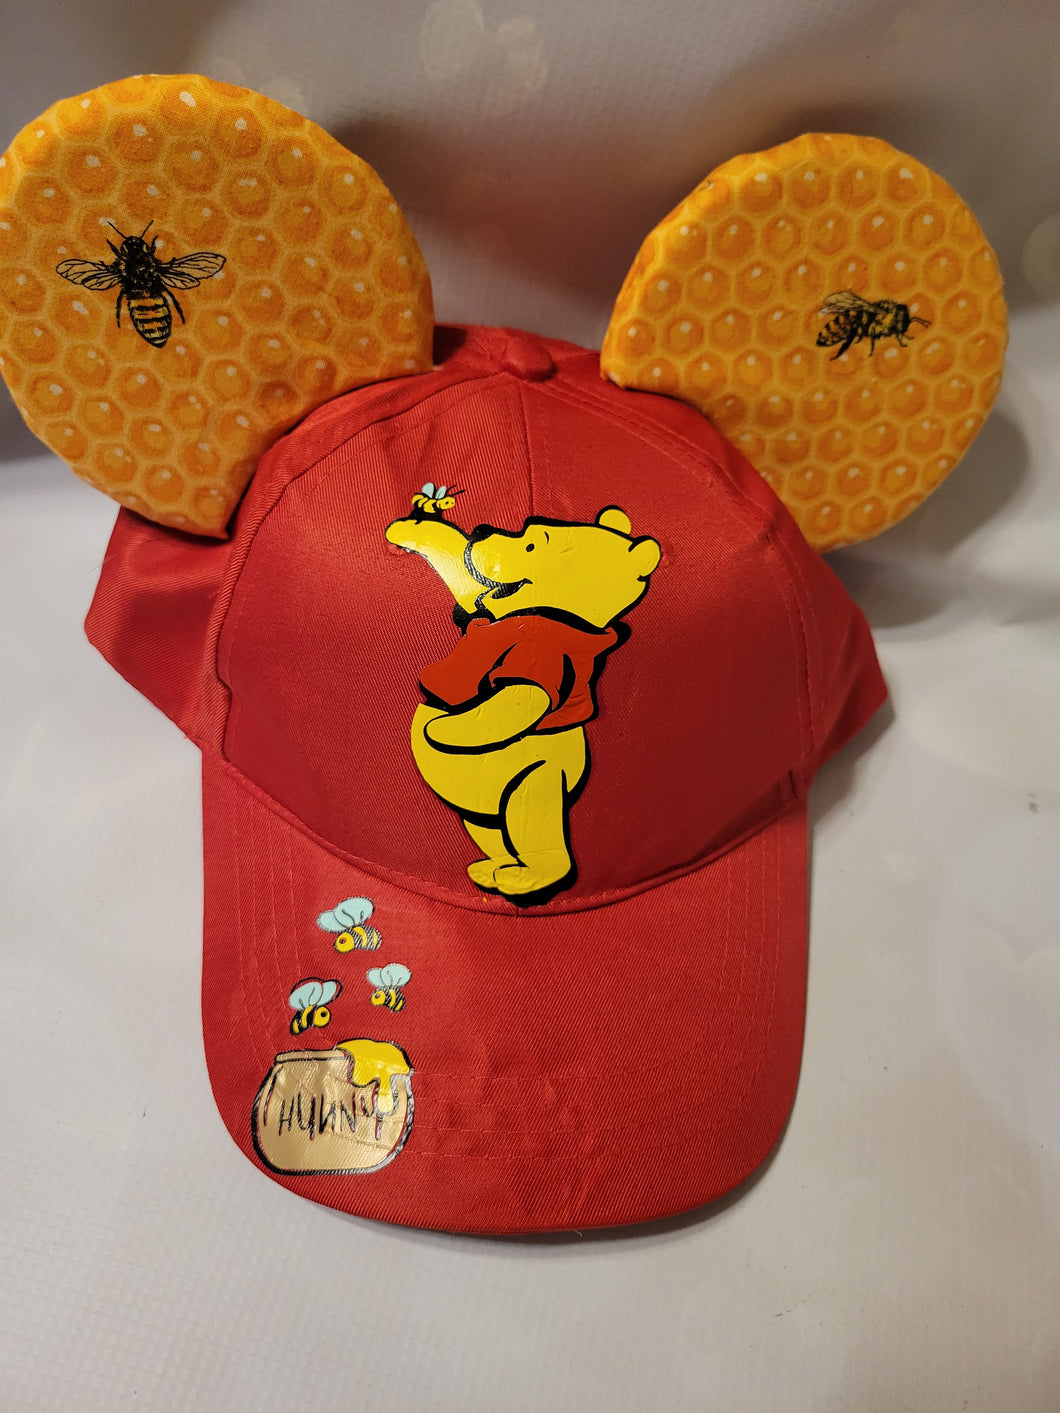 Pooh bear baseball cap with ears